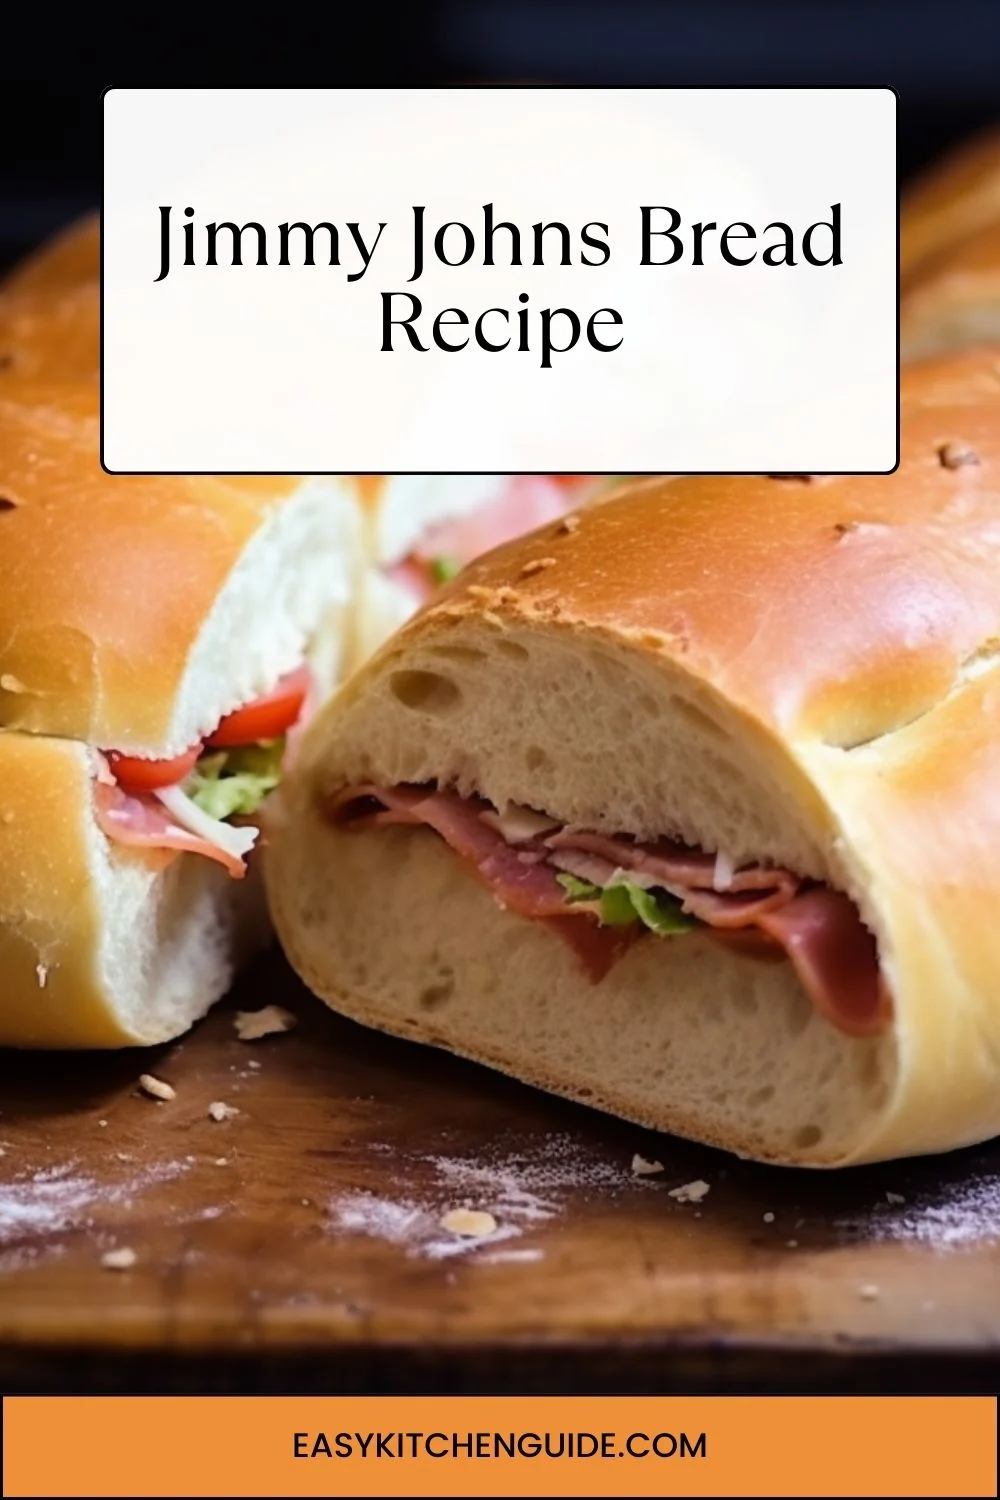 Jimmy Johns Bread Recipe